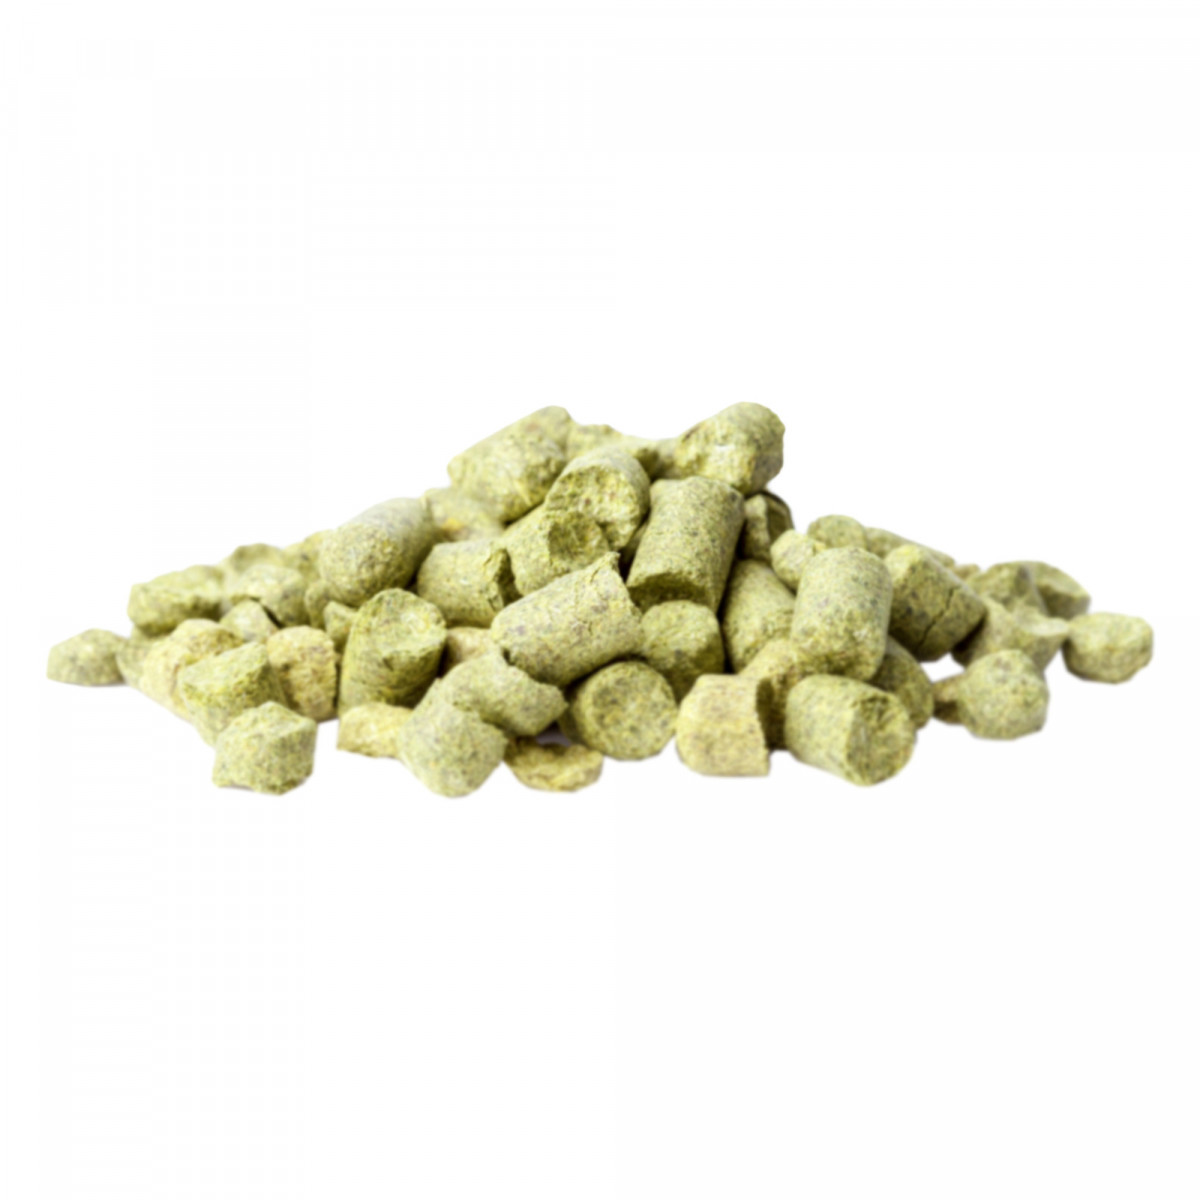 Hop pellets Idaho7 100 g